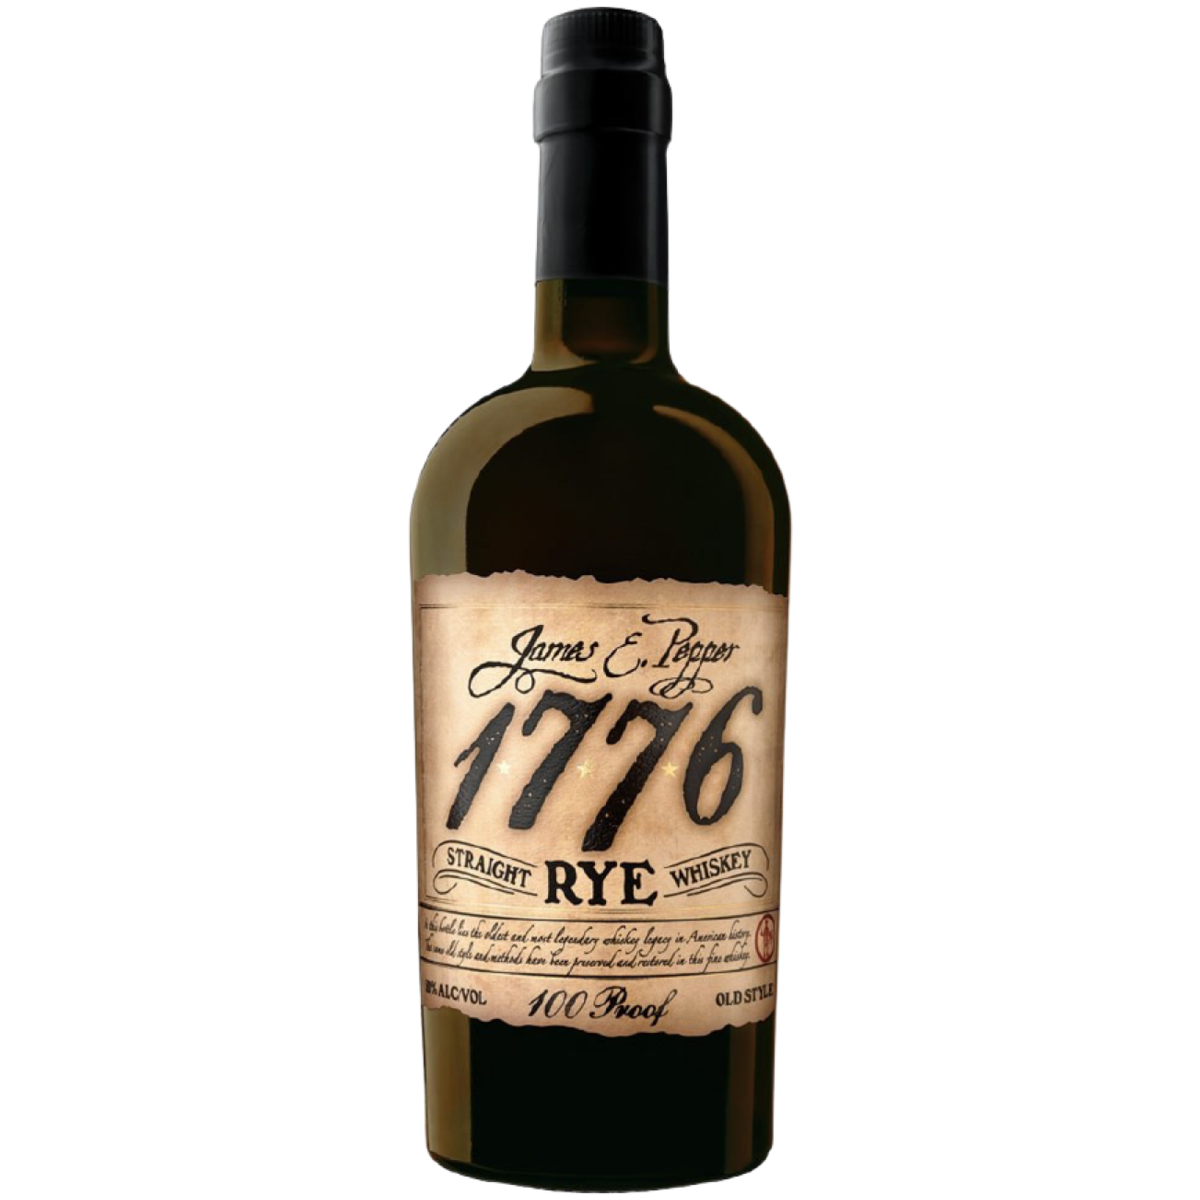 

Виски James E. Pepper 1776 Straight Rye 0,75 л